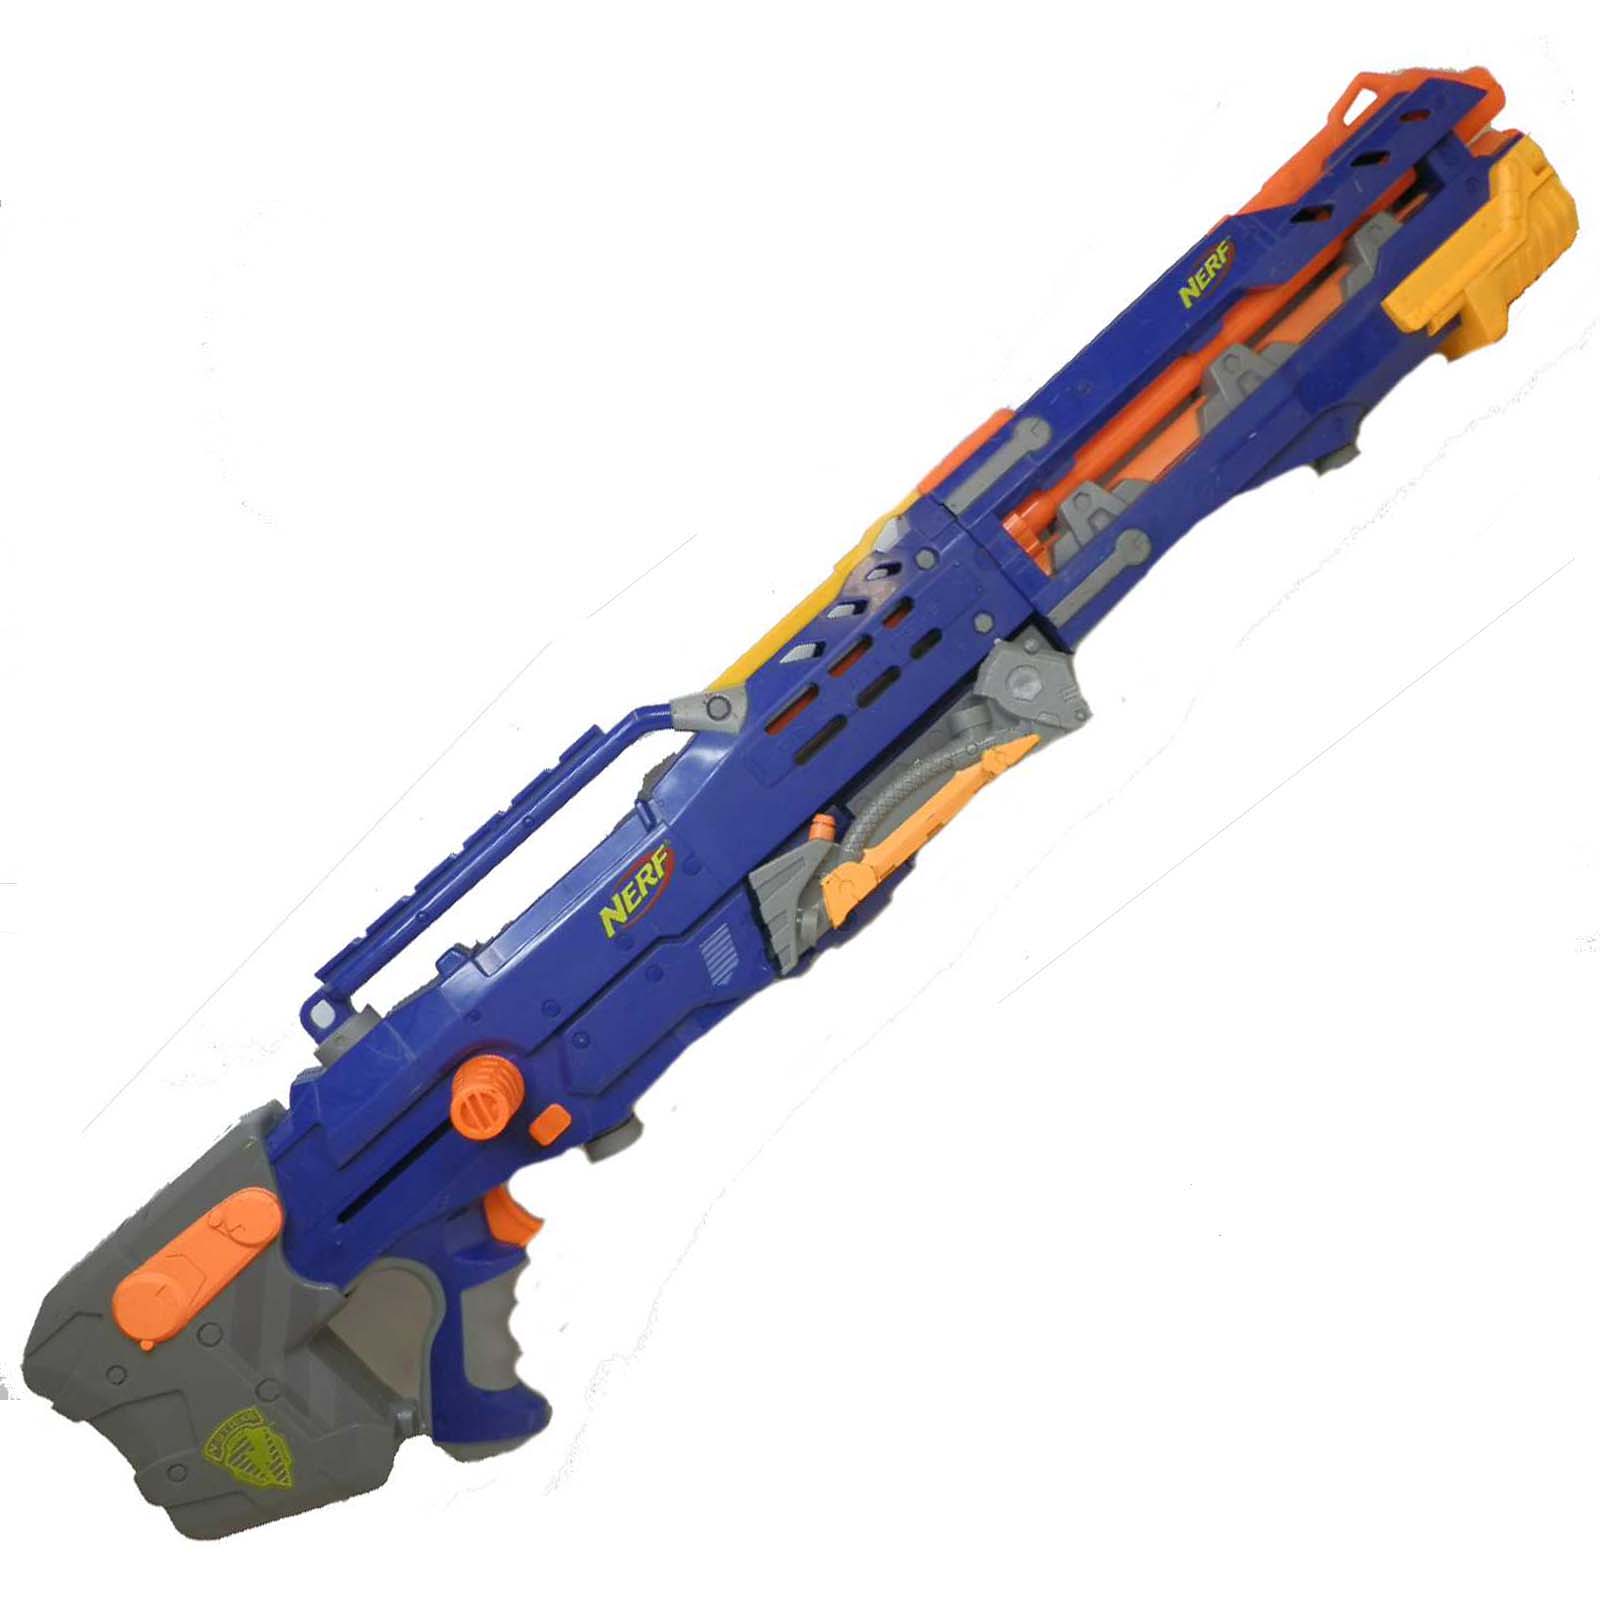 Nerf Longshot CS-6 Sniper & Zombie - toys & games - by owner - sale -  craigslist